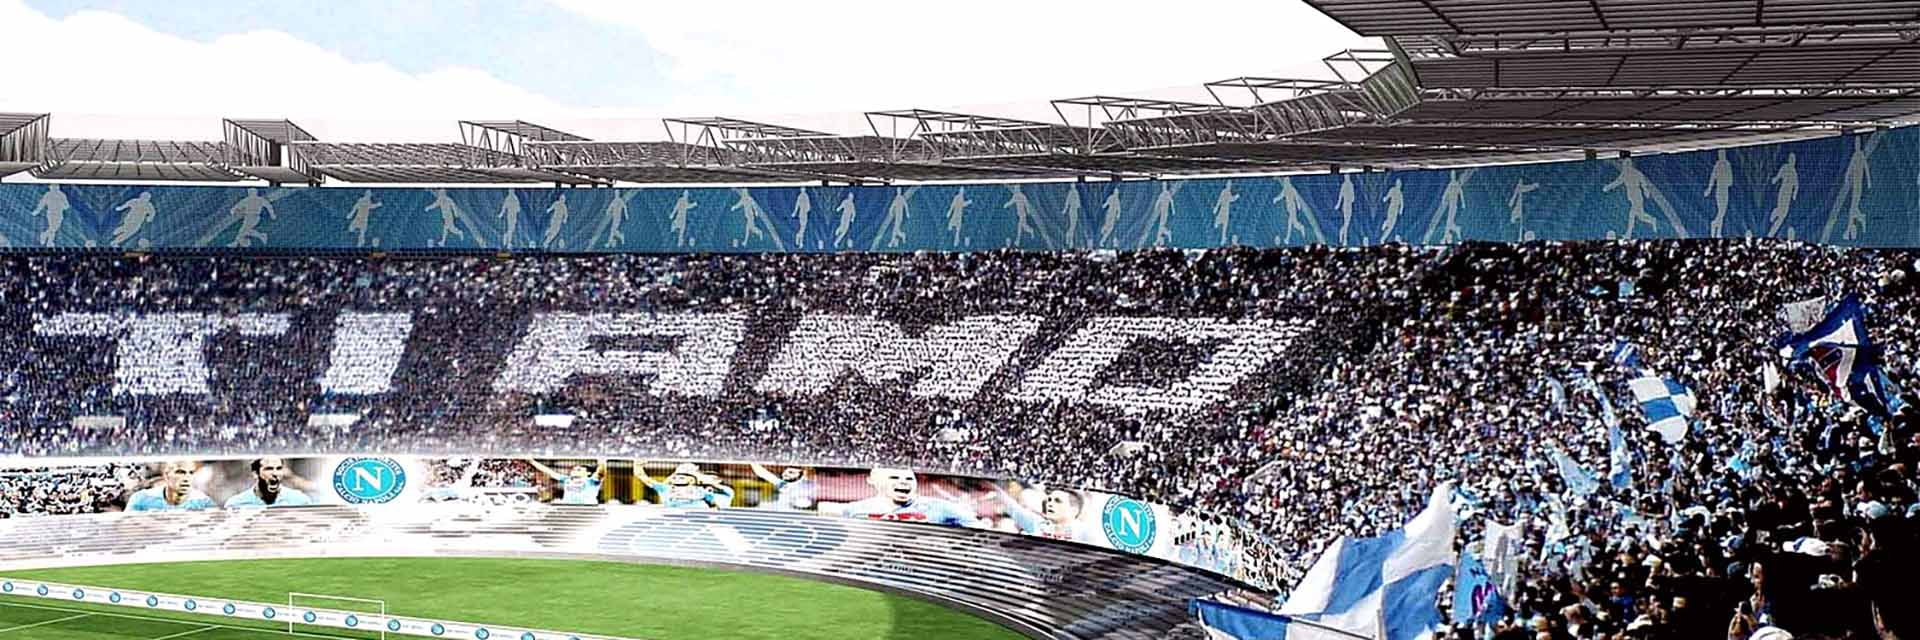 SSC Napoli - Juventus FC, 7 marsden 20:45